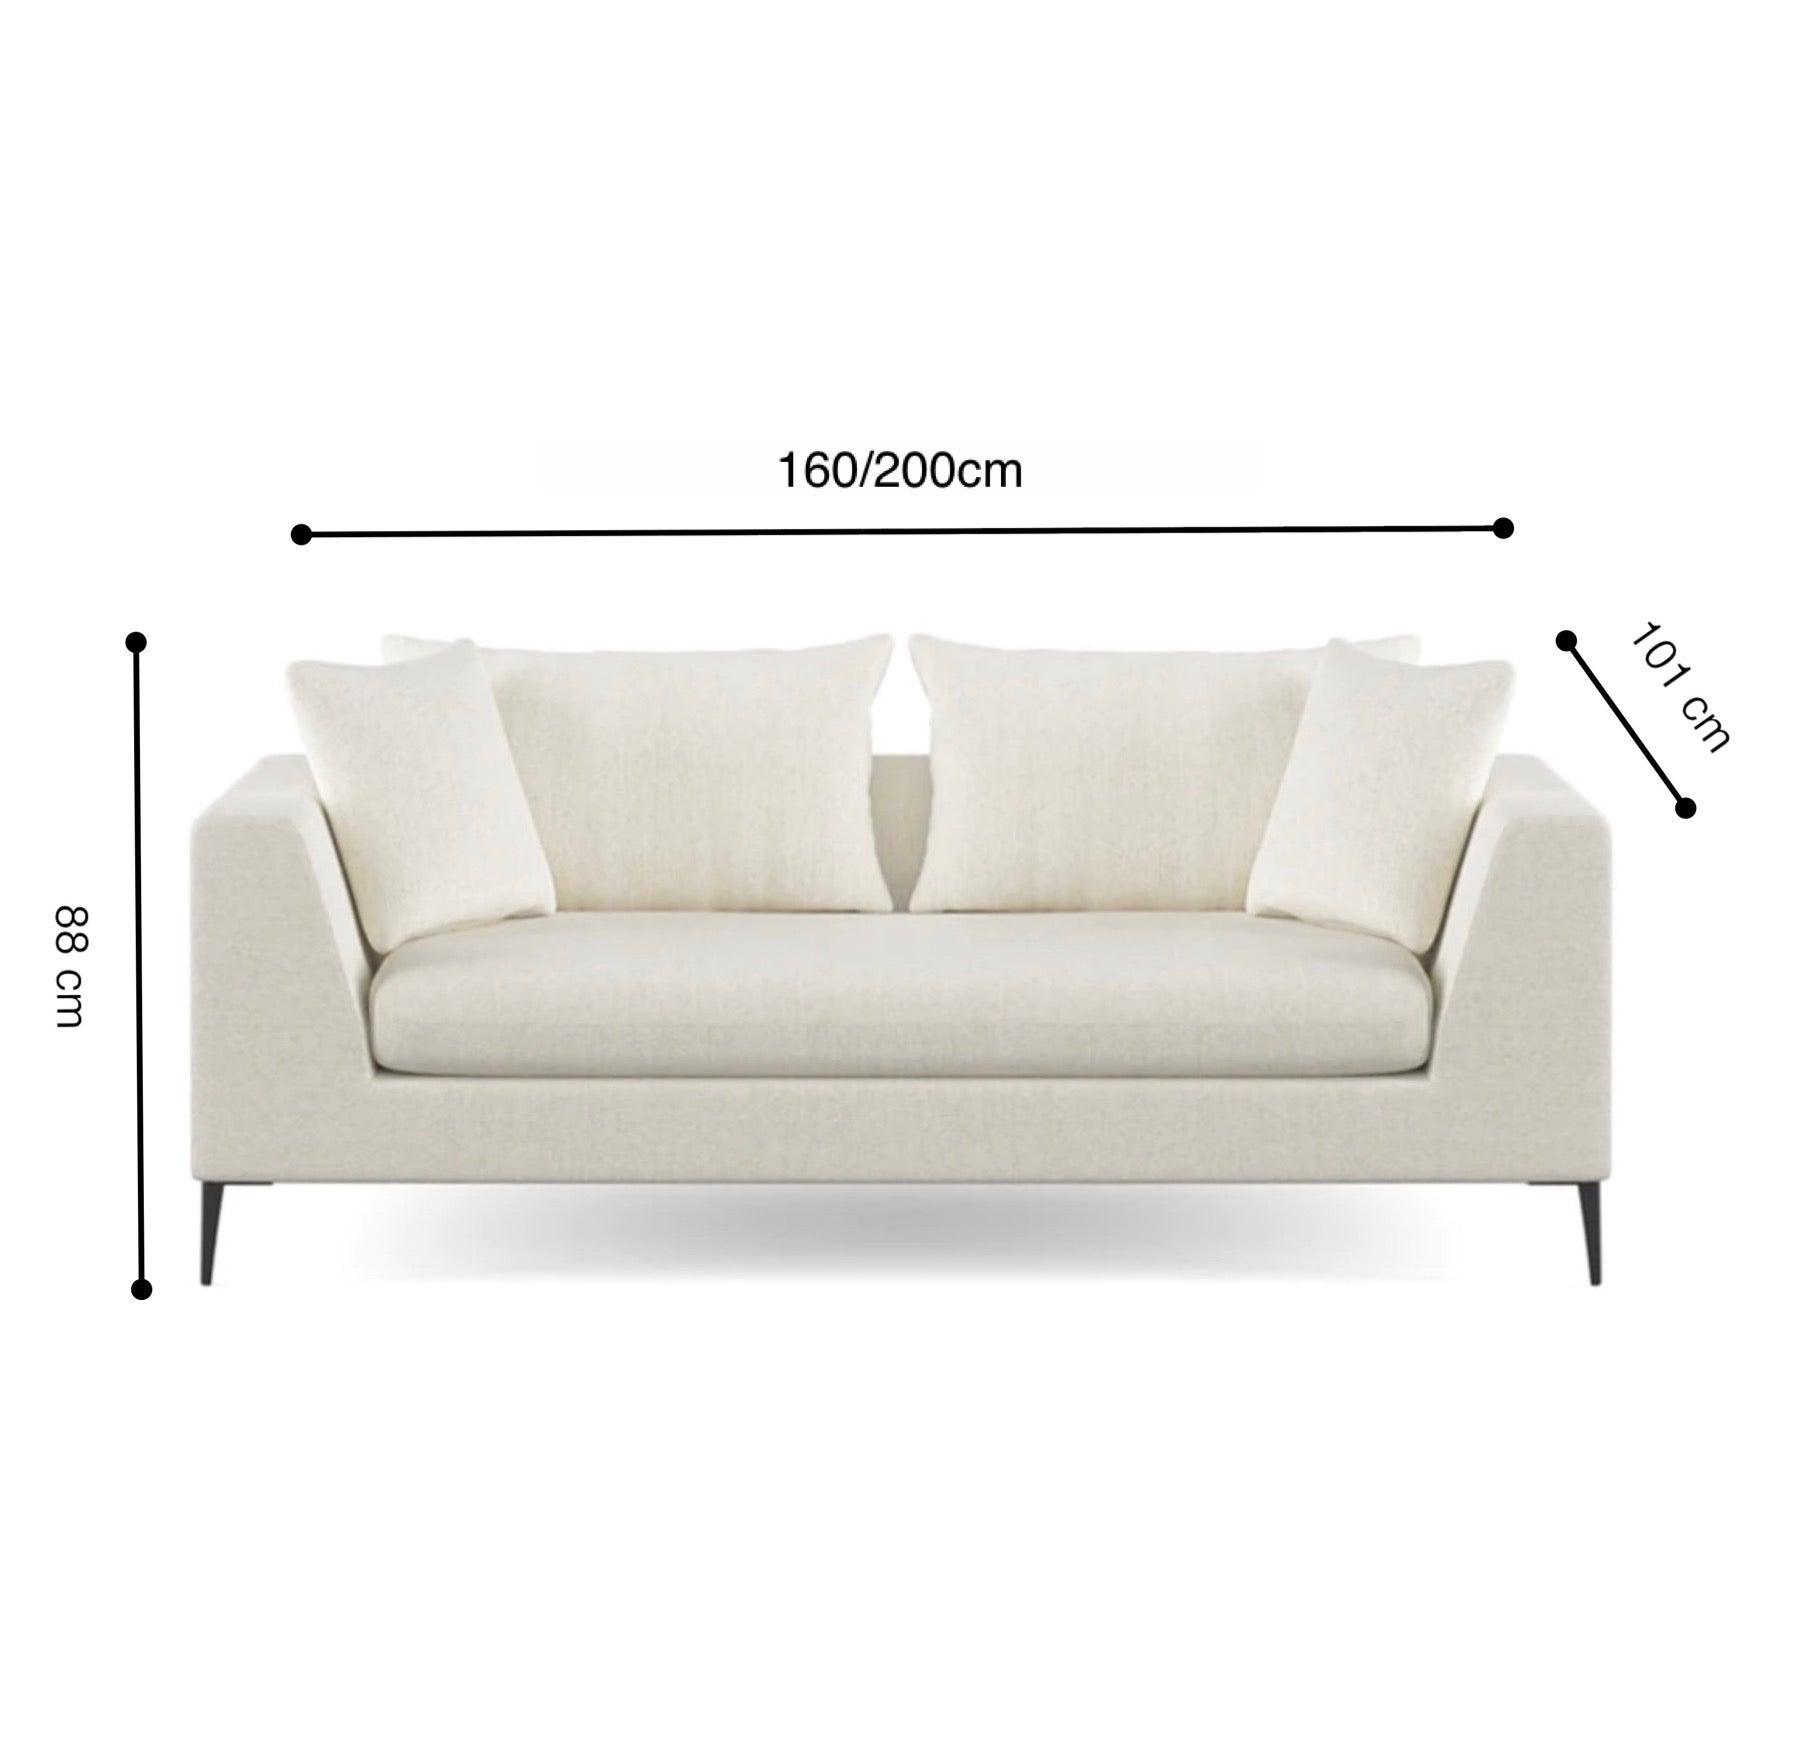 Home Atelier Cotton Linen Fabric / 3 seater/ Length 200cm / Cream Arellano Sectional Sofa